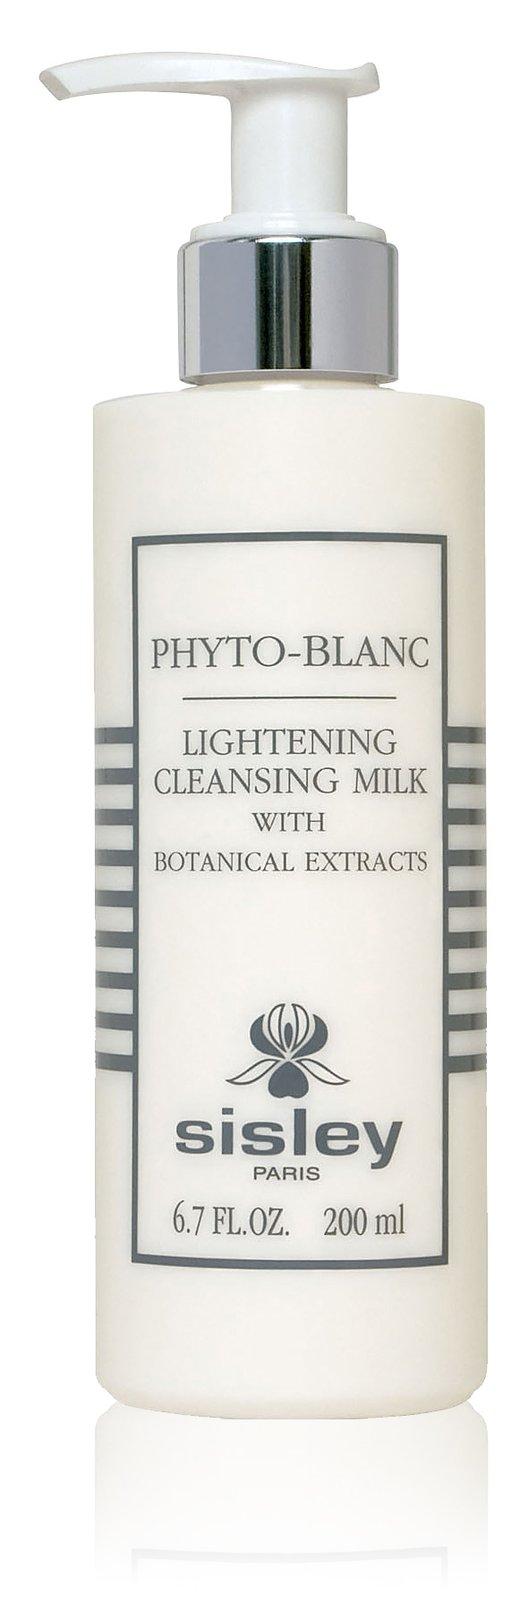 Sisley-paris Phyto Blanc Lightening Cleansing Milk